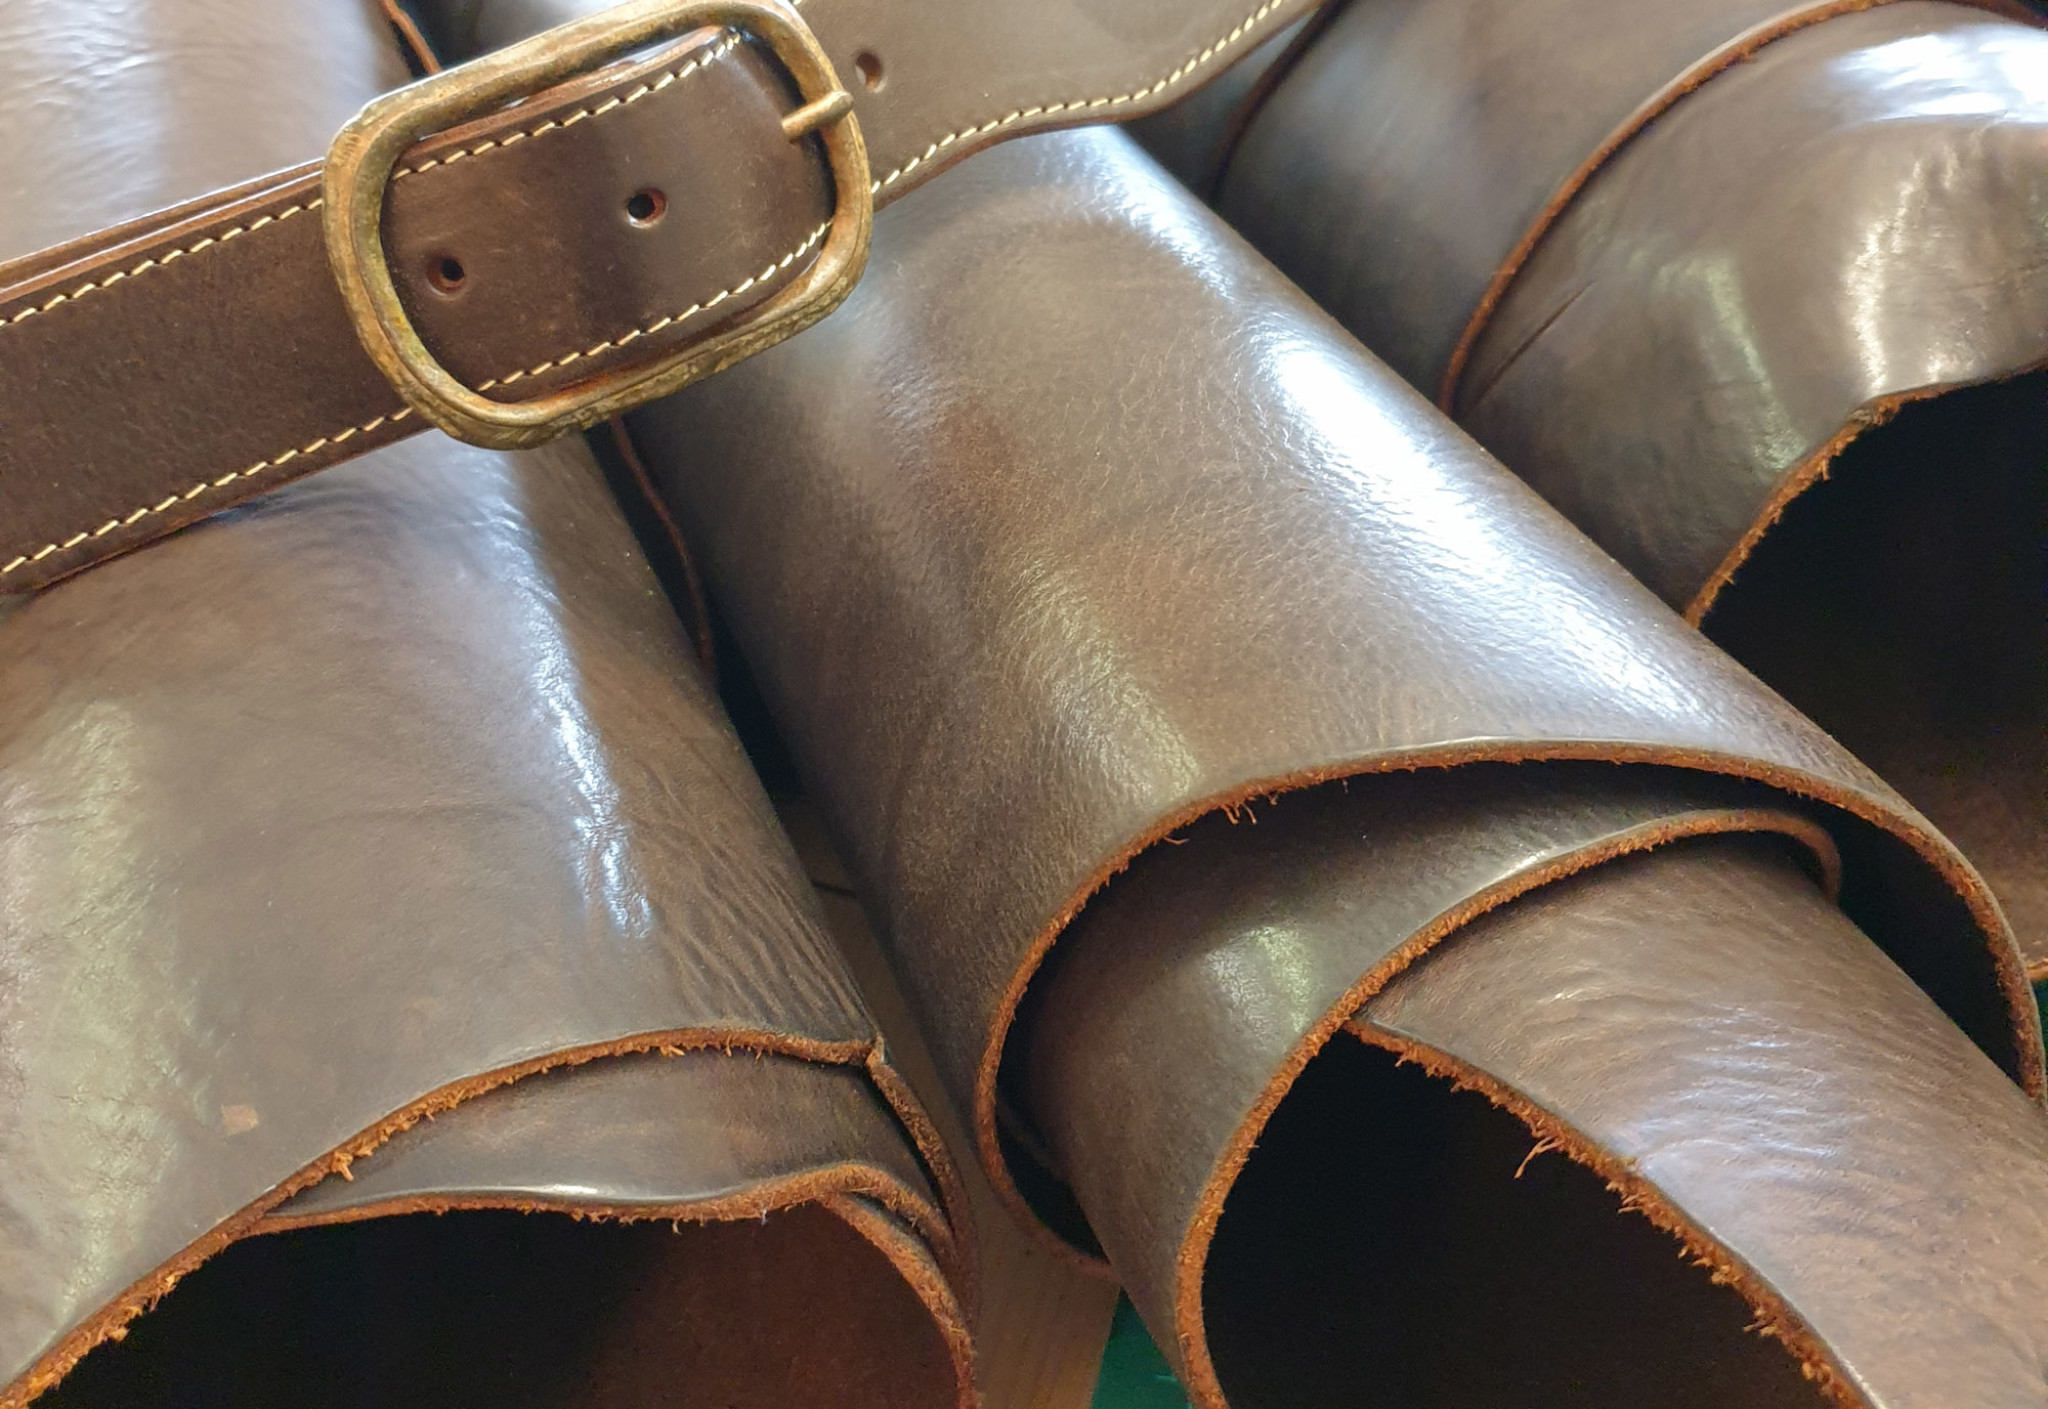 rolls of leather.jpg